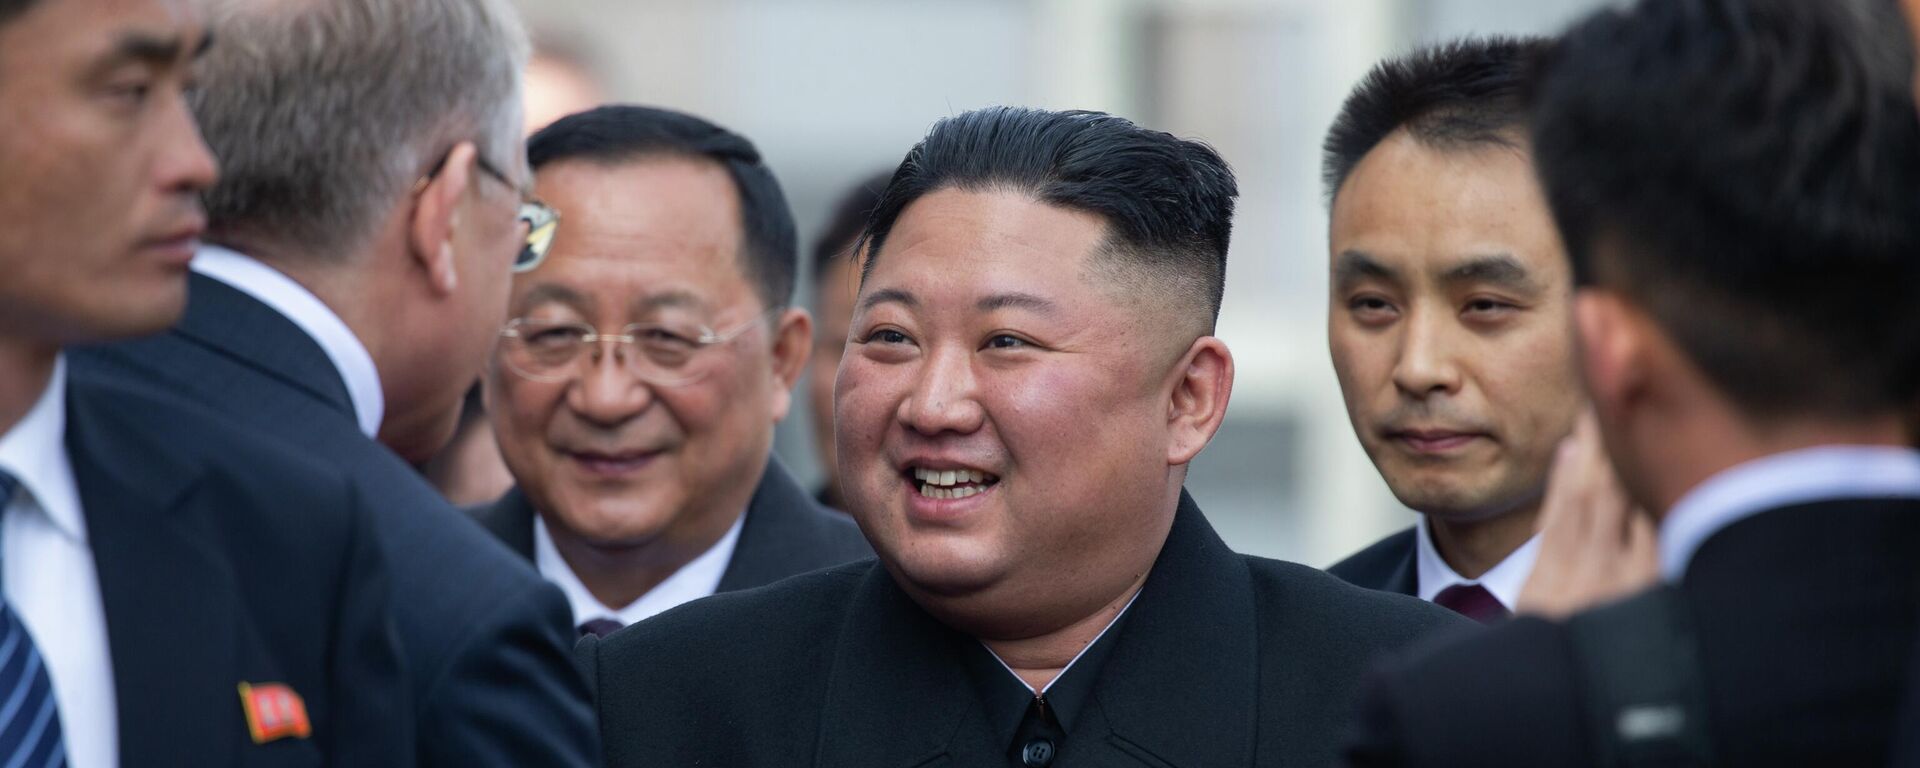 North Korea's leader Kim Jong-un smiles at a train station before departure from Vladivostok, Russia - Sputnik International, 1920, 23.06.2022